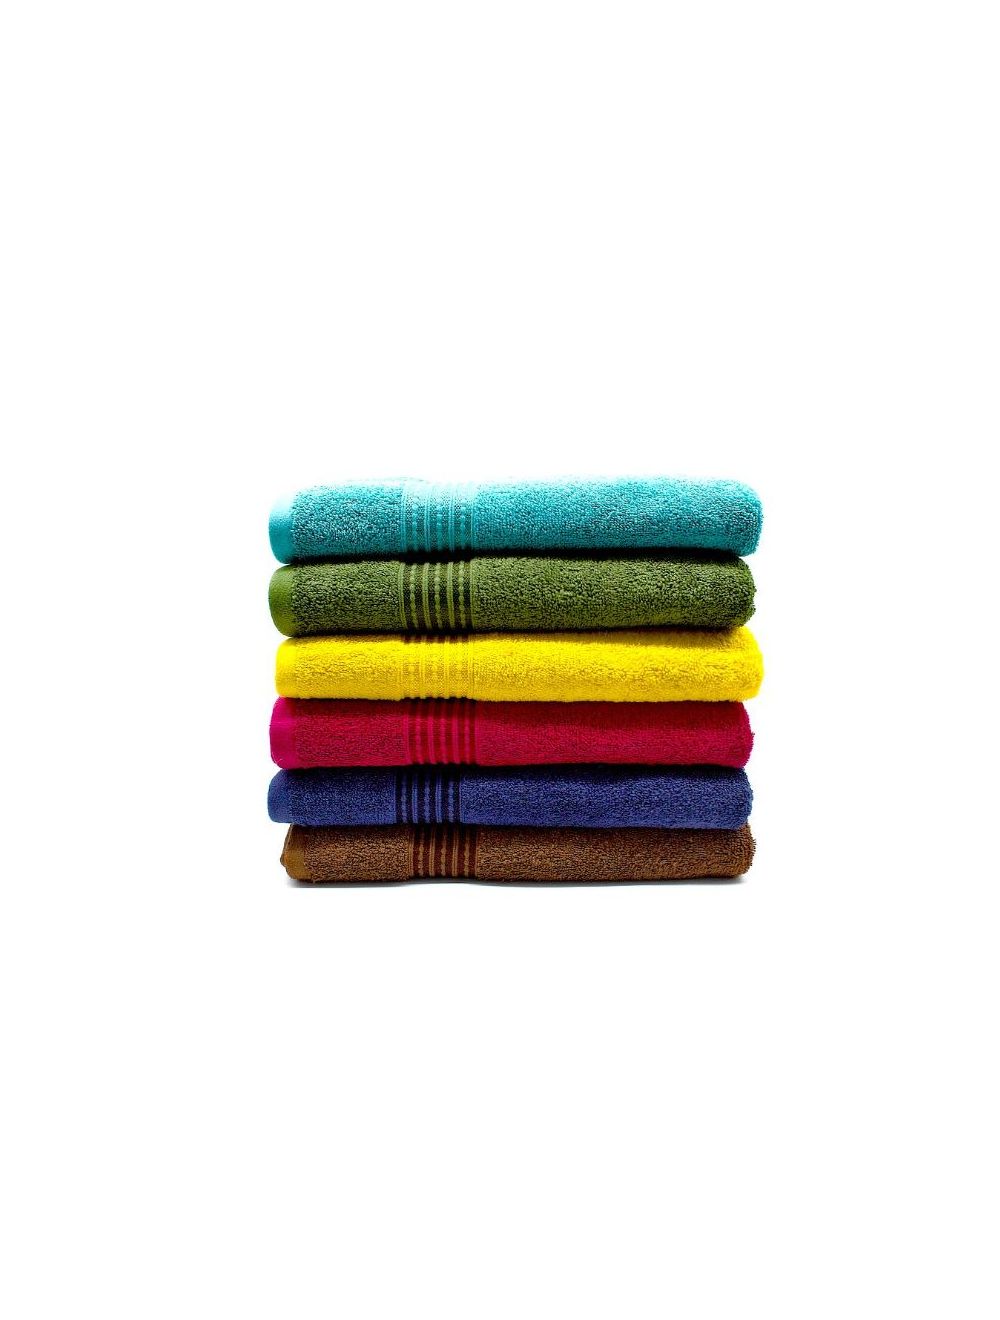 Rahalife 100% Cotton 6-Piece Bath Towel Set, Classic Collection -14RLBT013